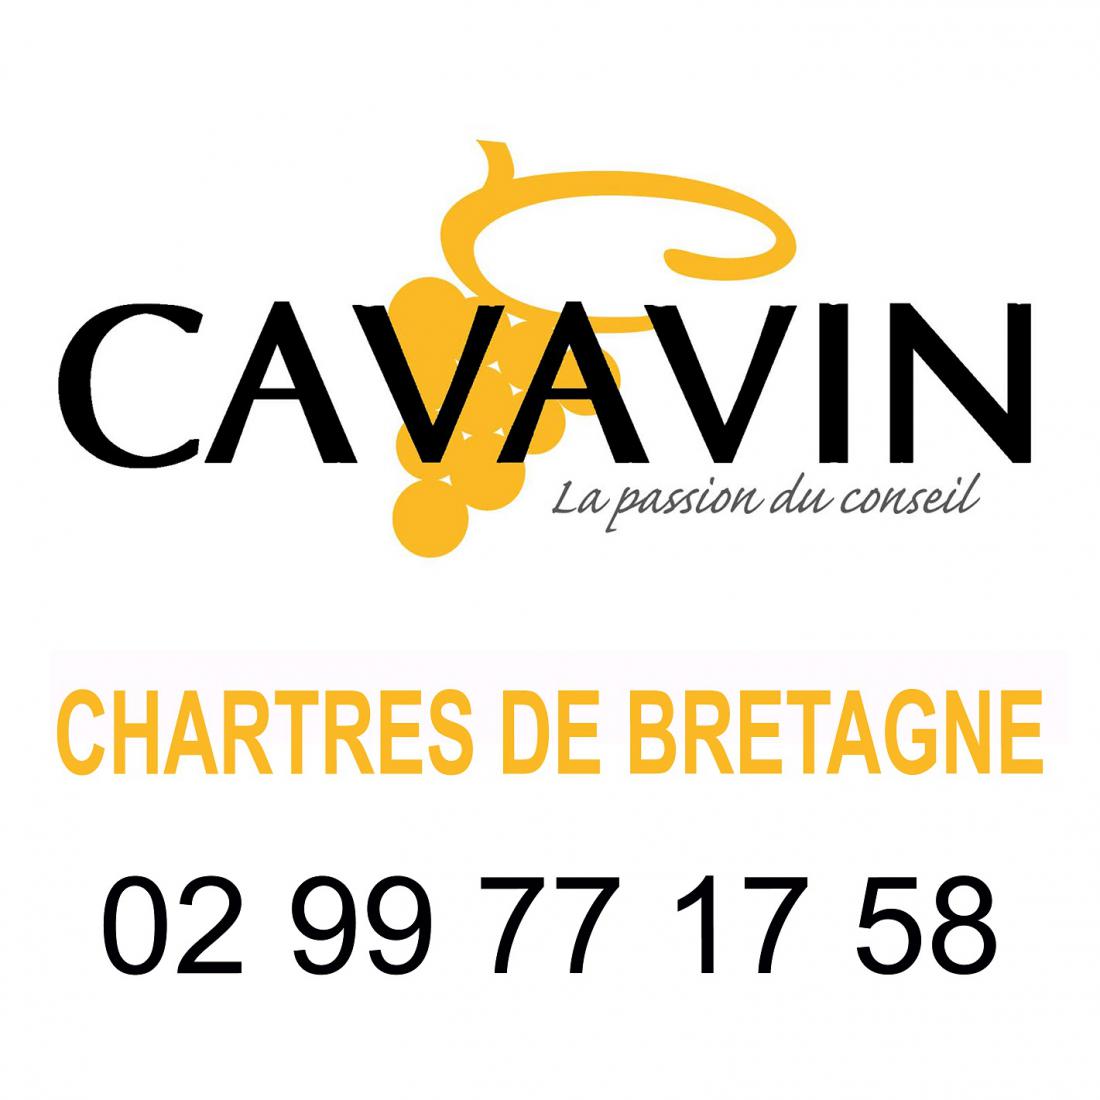 Cavavin 